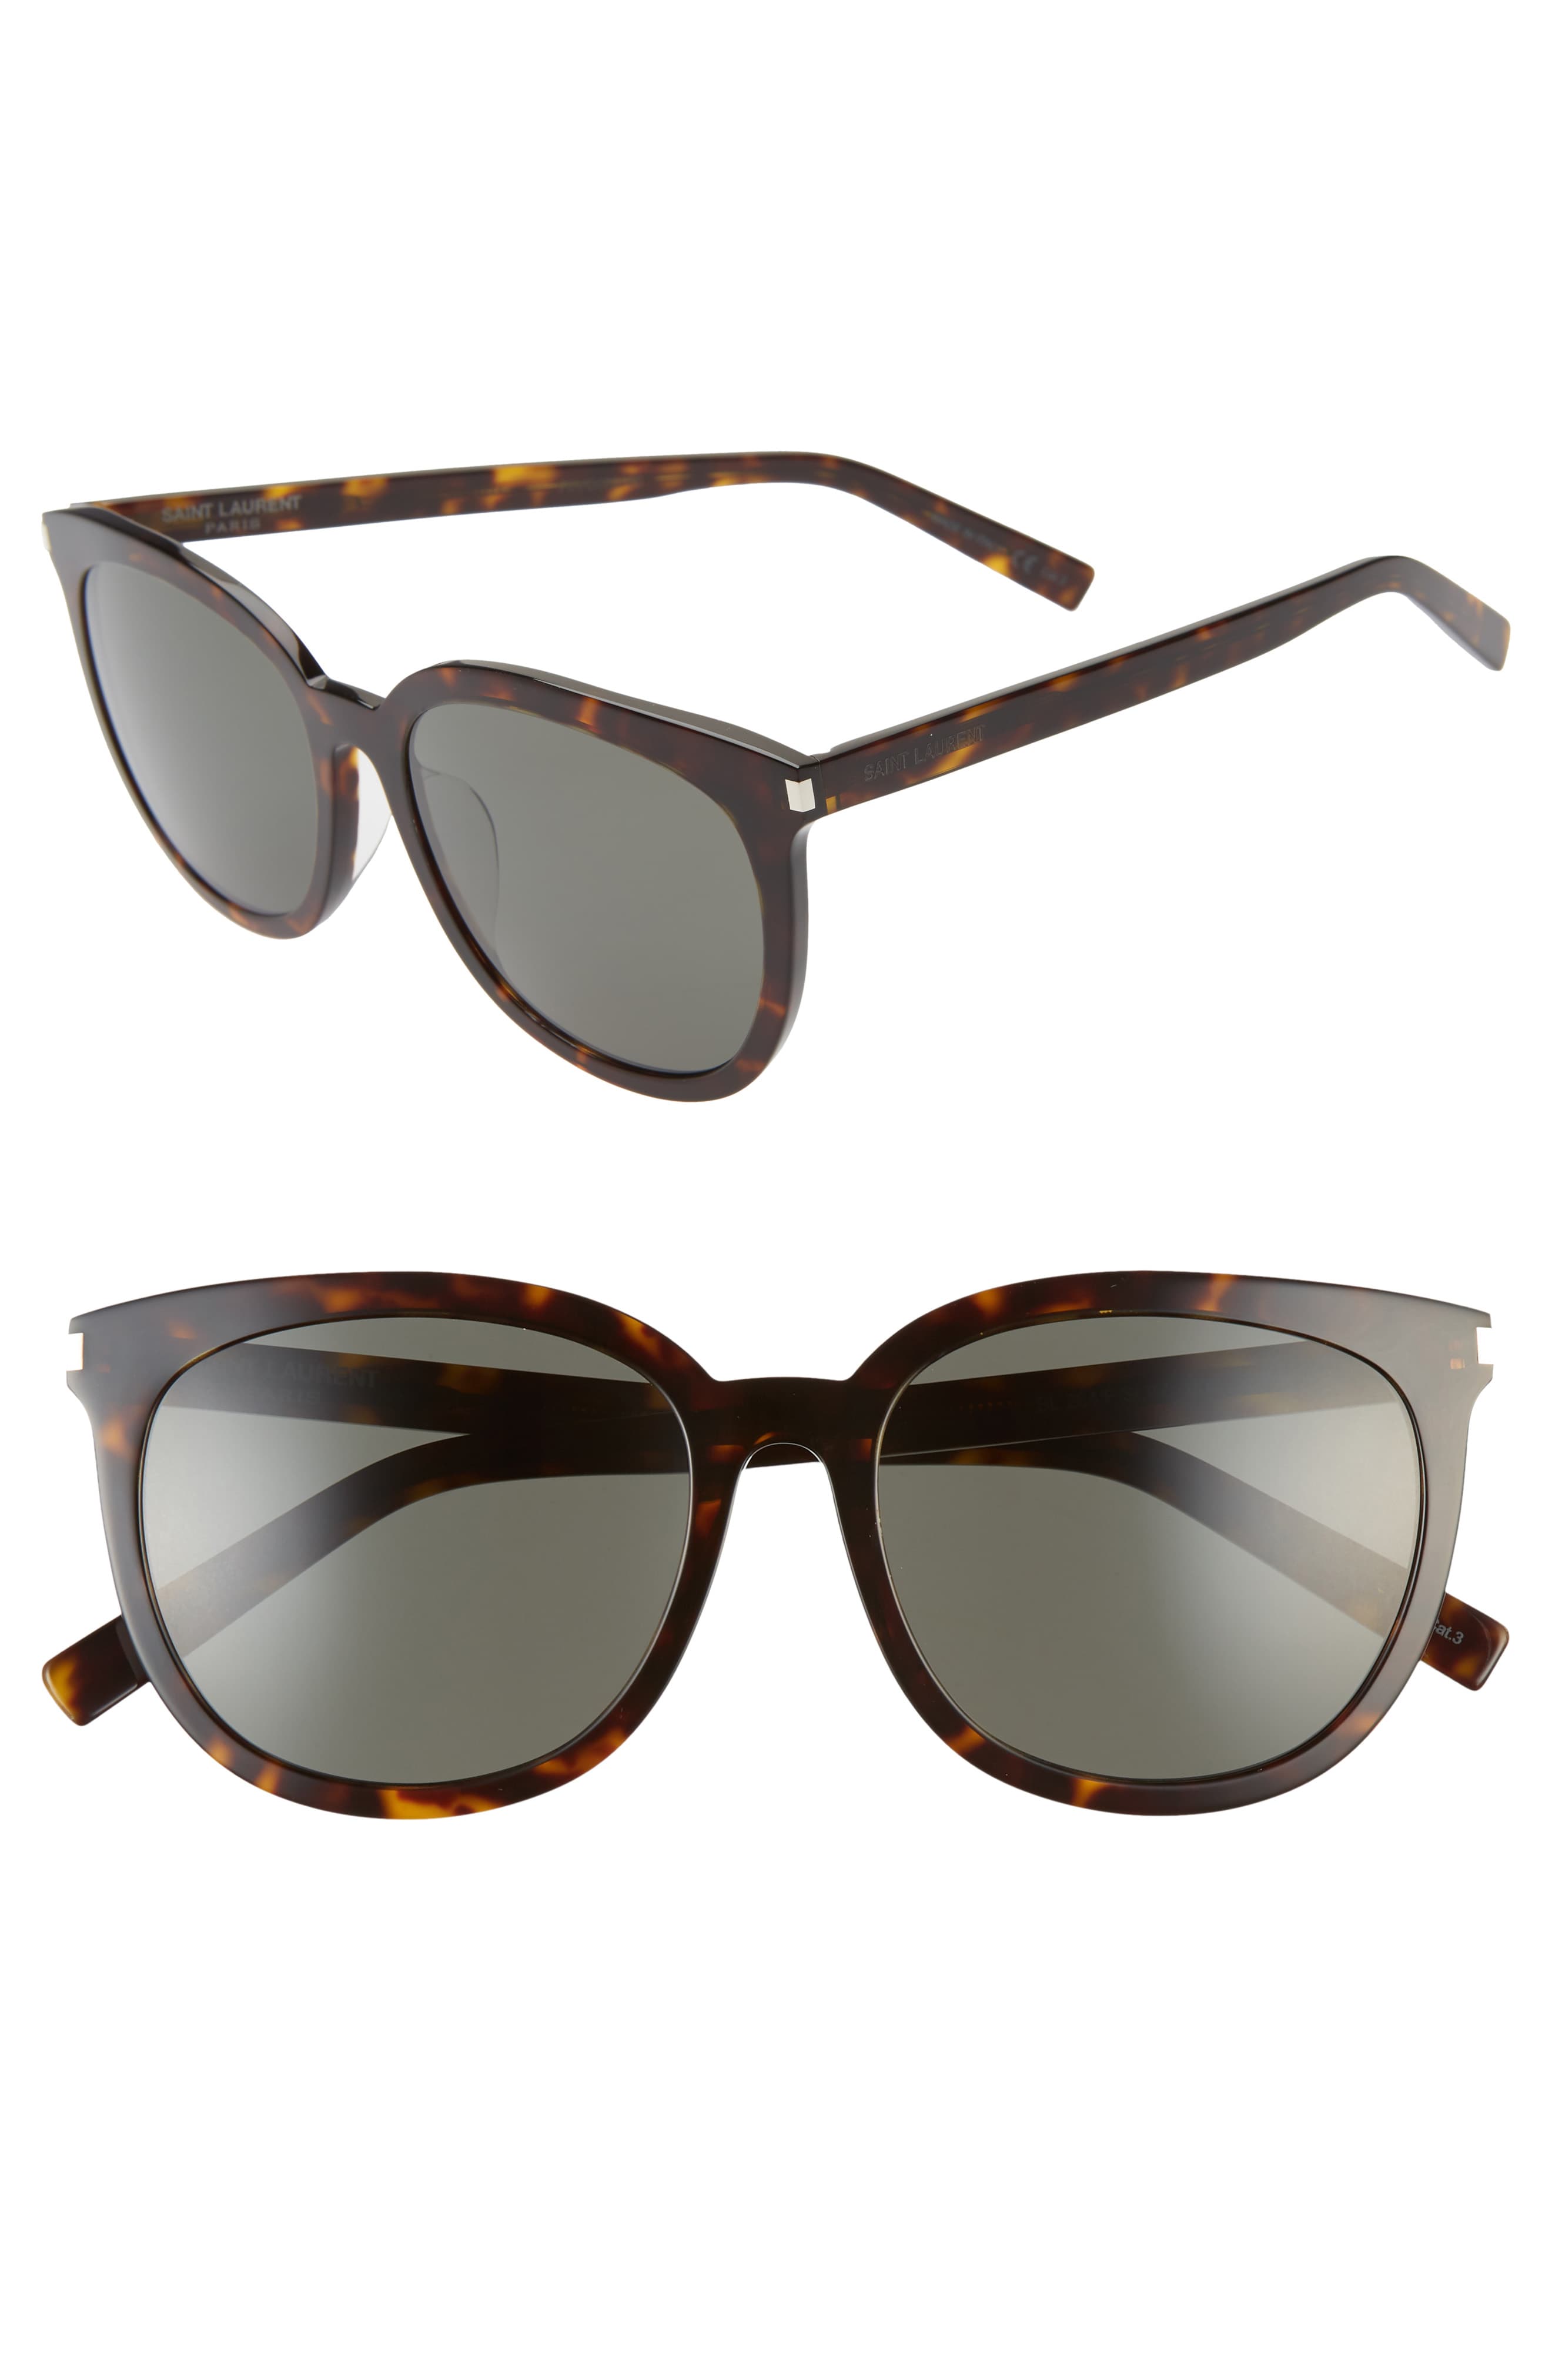 Saint Laurent Slim 56mm Cat Eye Sunglasses Shiny Dark Havana The